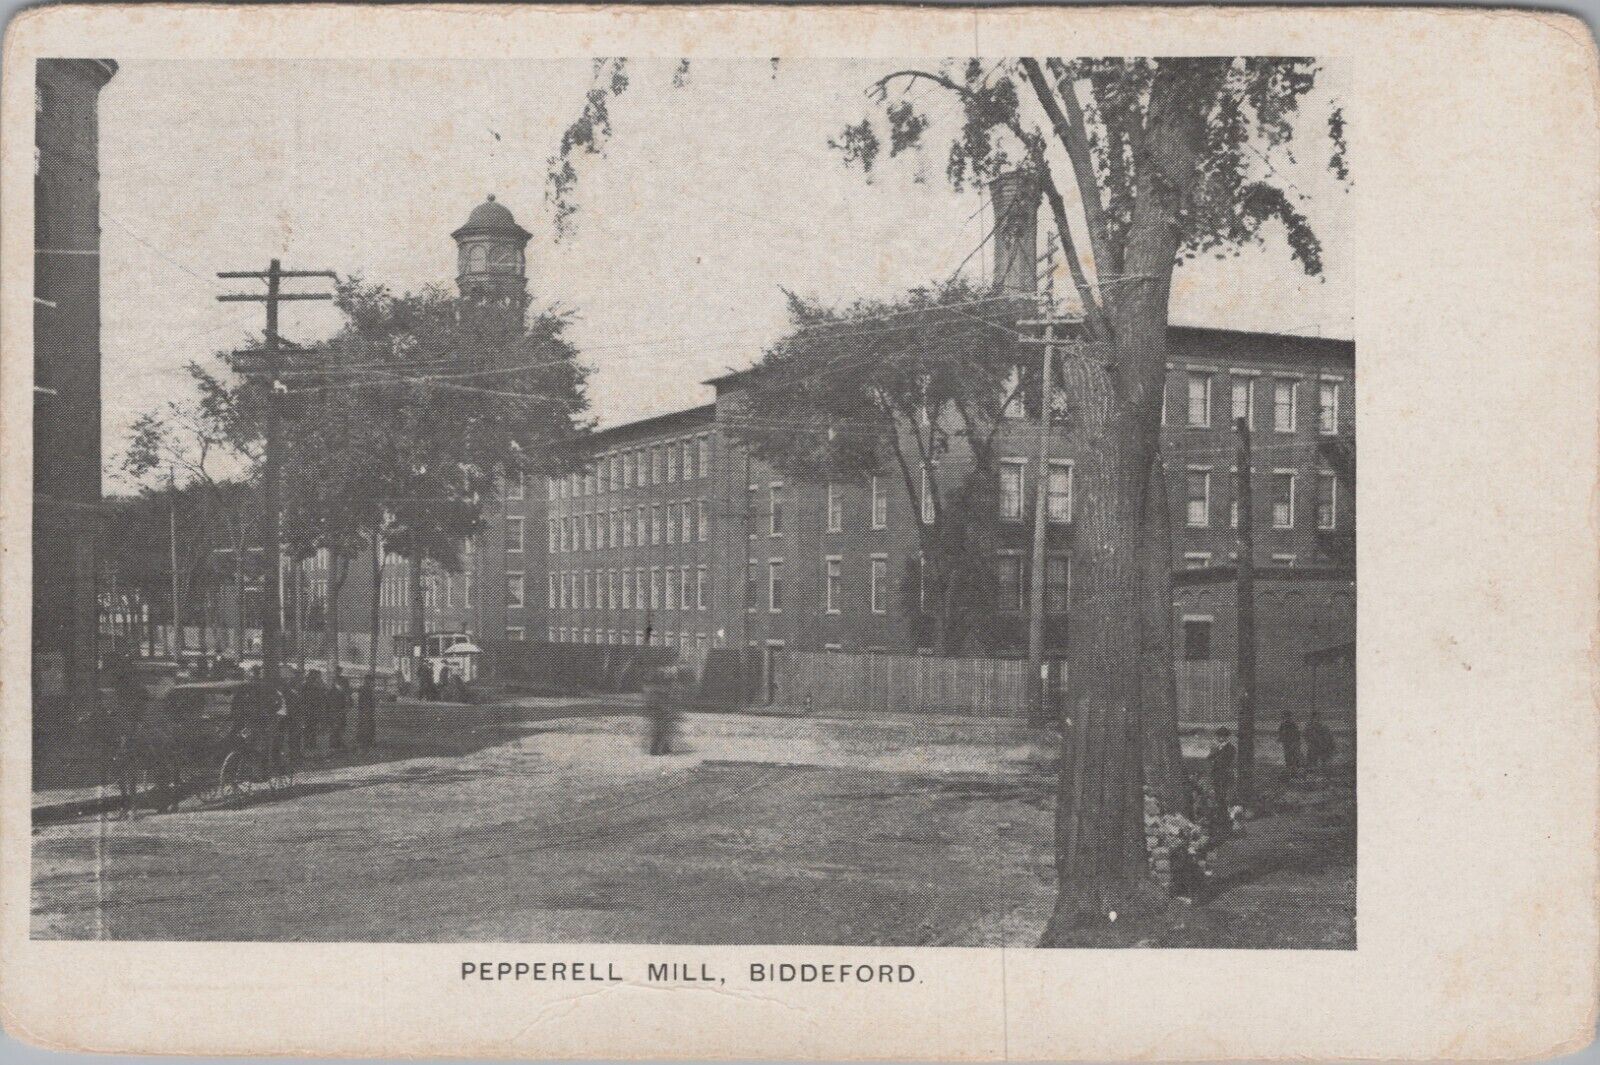 MR ALE ~ Pepperell Mill Biddeford Maine ME c1905 Postcard UNP 7815c